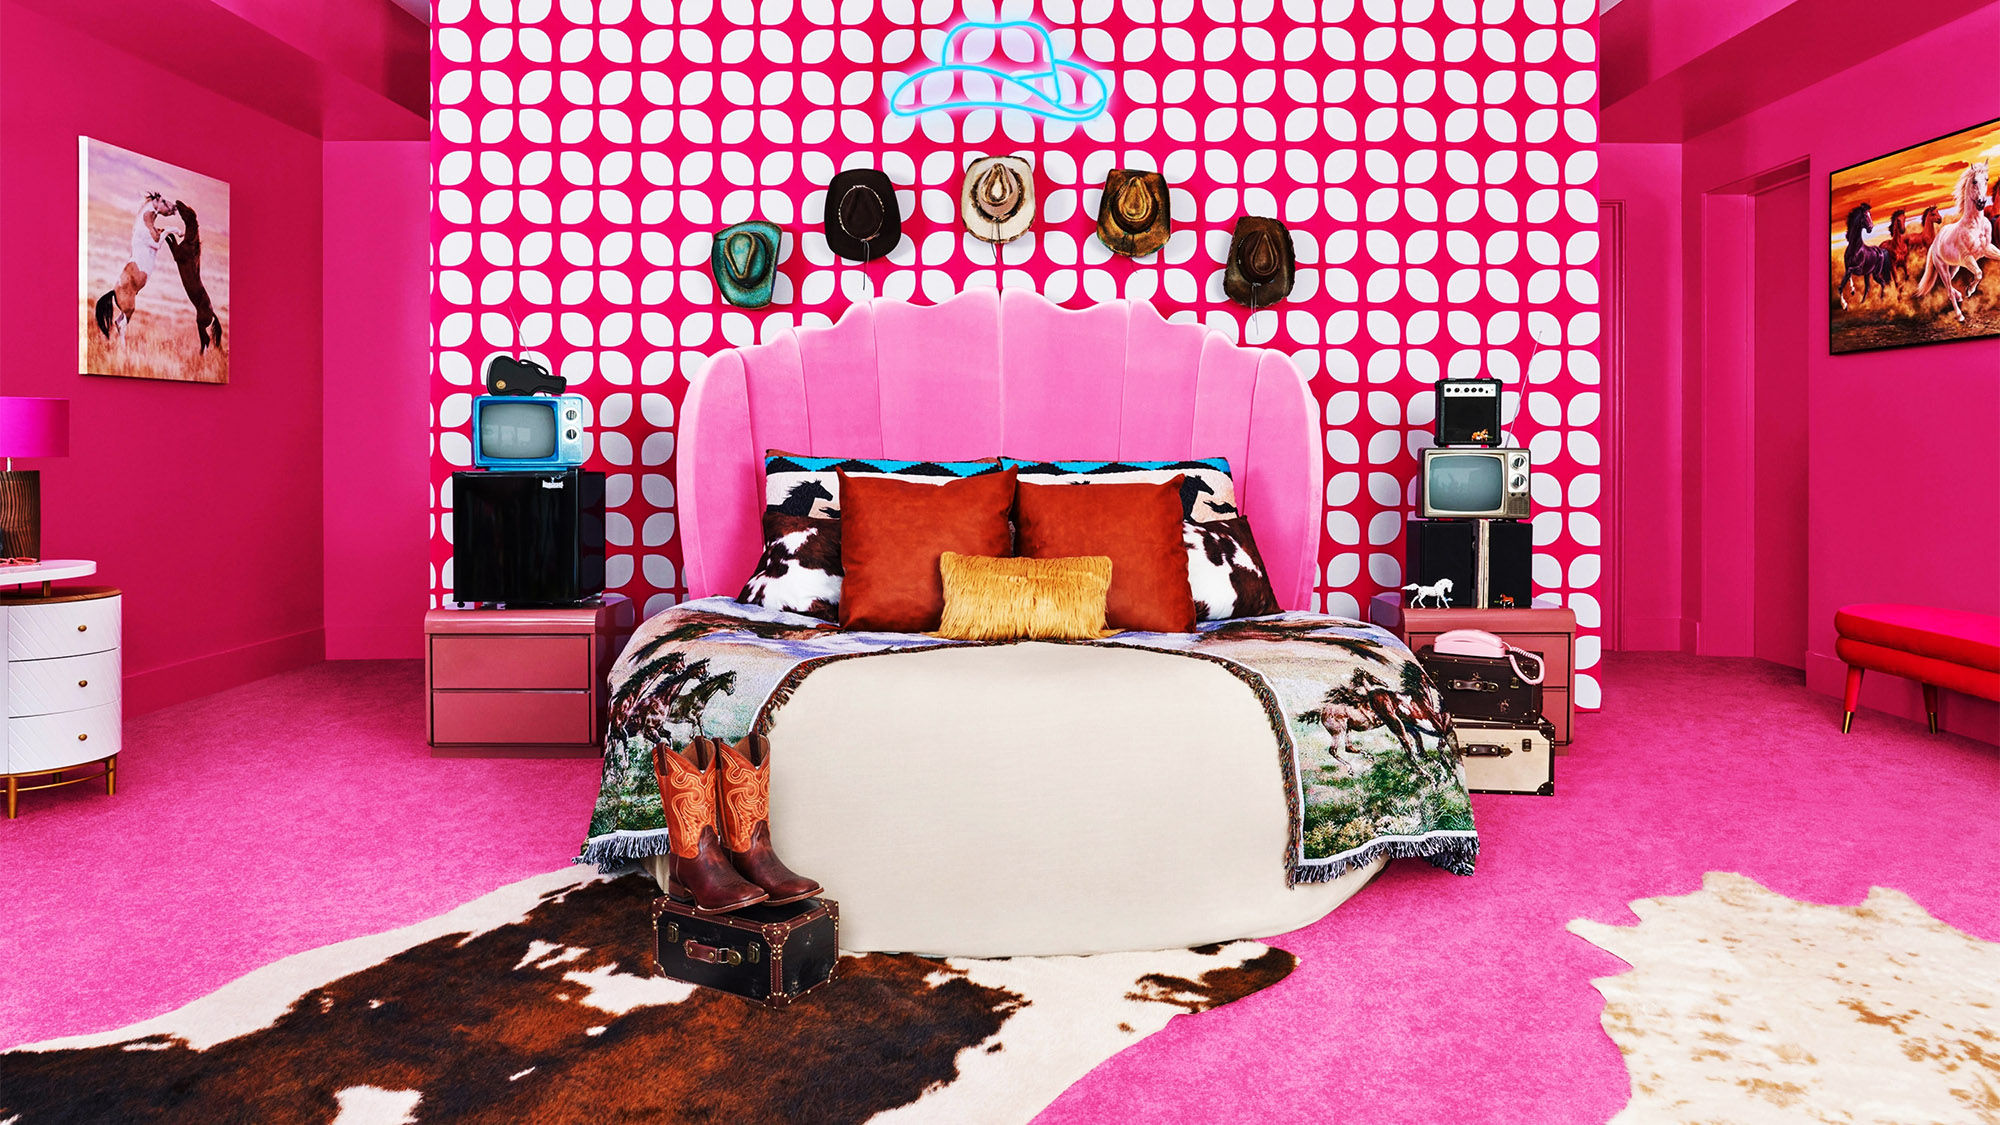 Ken's bedroom at the Barbie's Malibu DreamHouse in California.